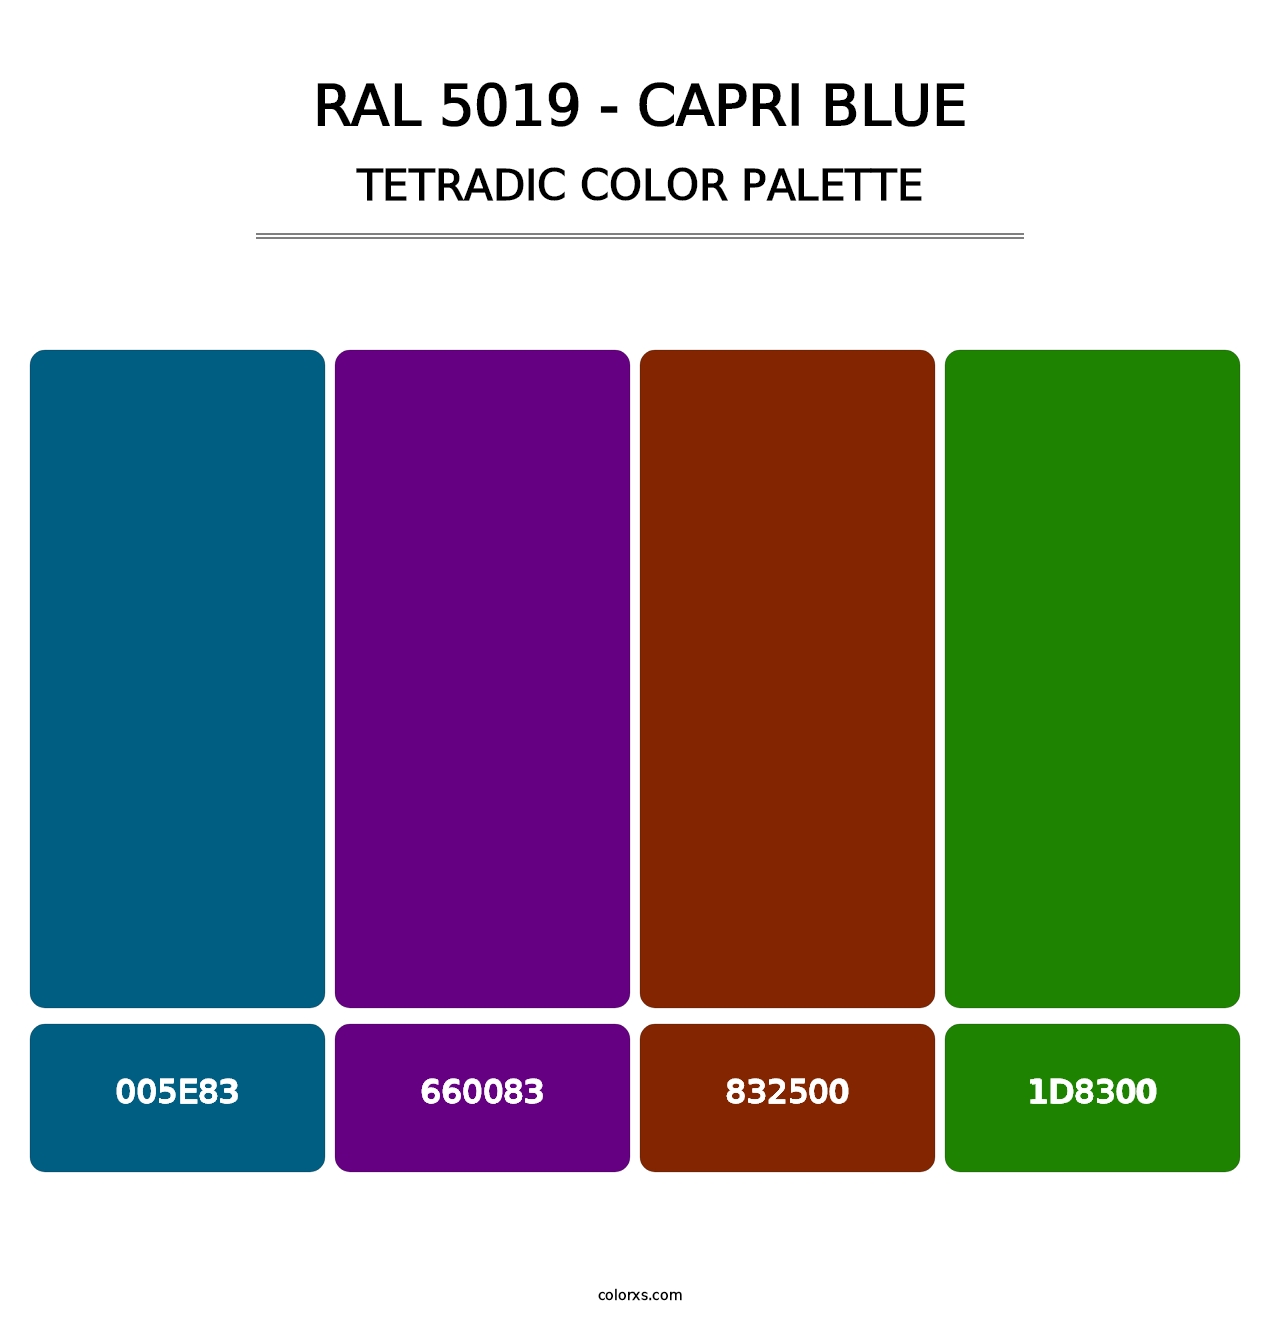 RAL 5019 - Capri Blue - Tetradic Color Palette